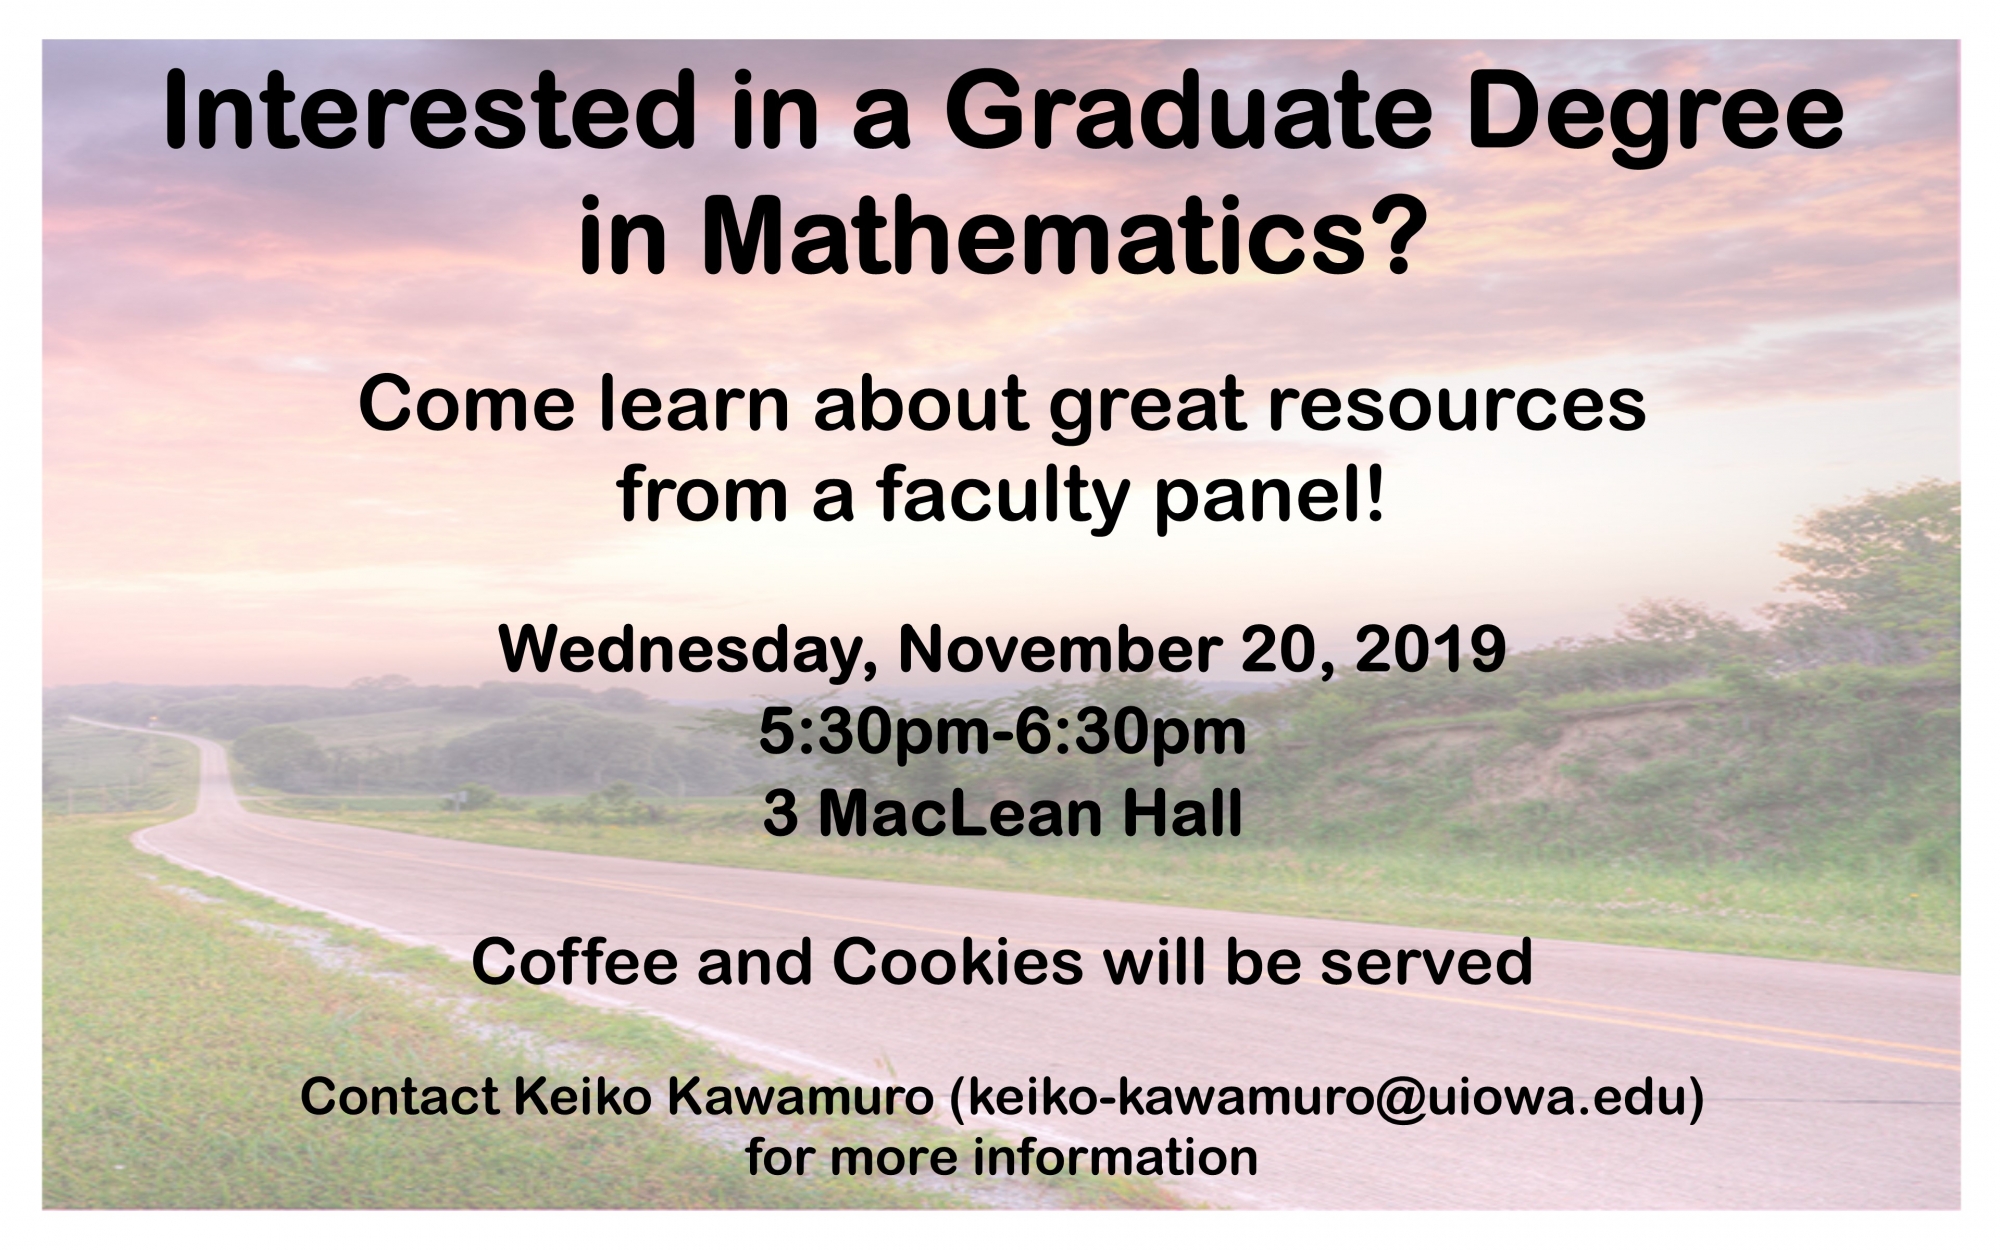 Interest in a Graduate Degree in Mathematics? Wednesday, November 20, 2019. Contact keiki-kawamuro@uiowa.edu for more information.